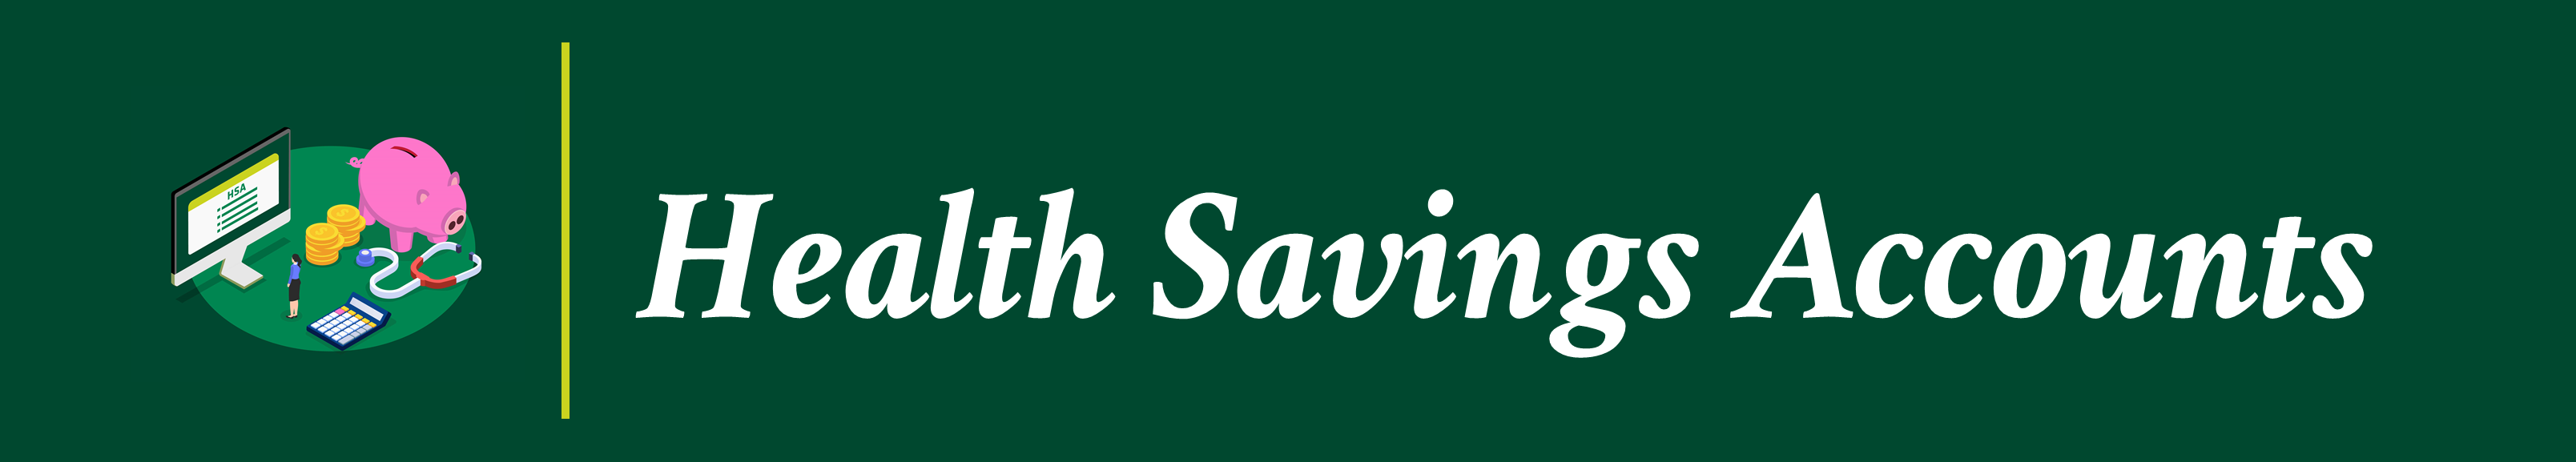 Health Savings Account Banner